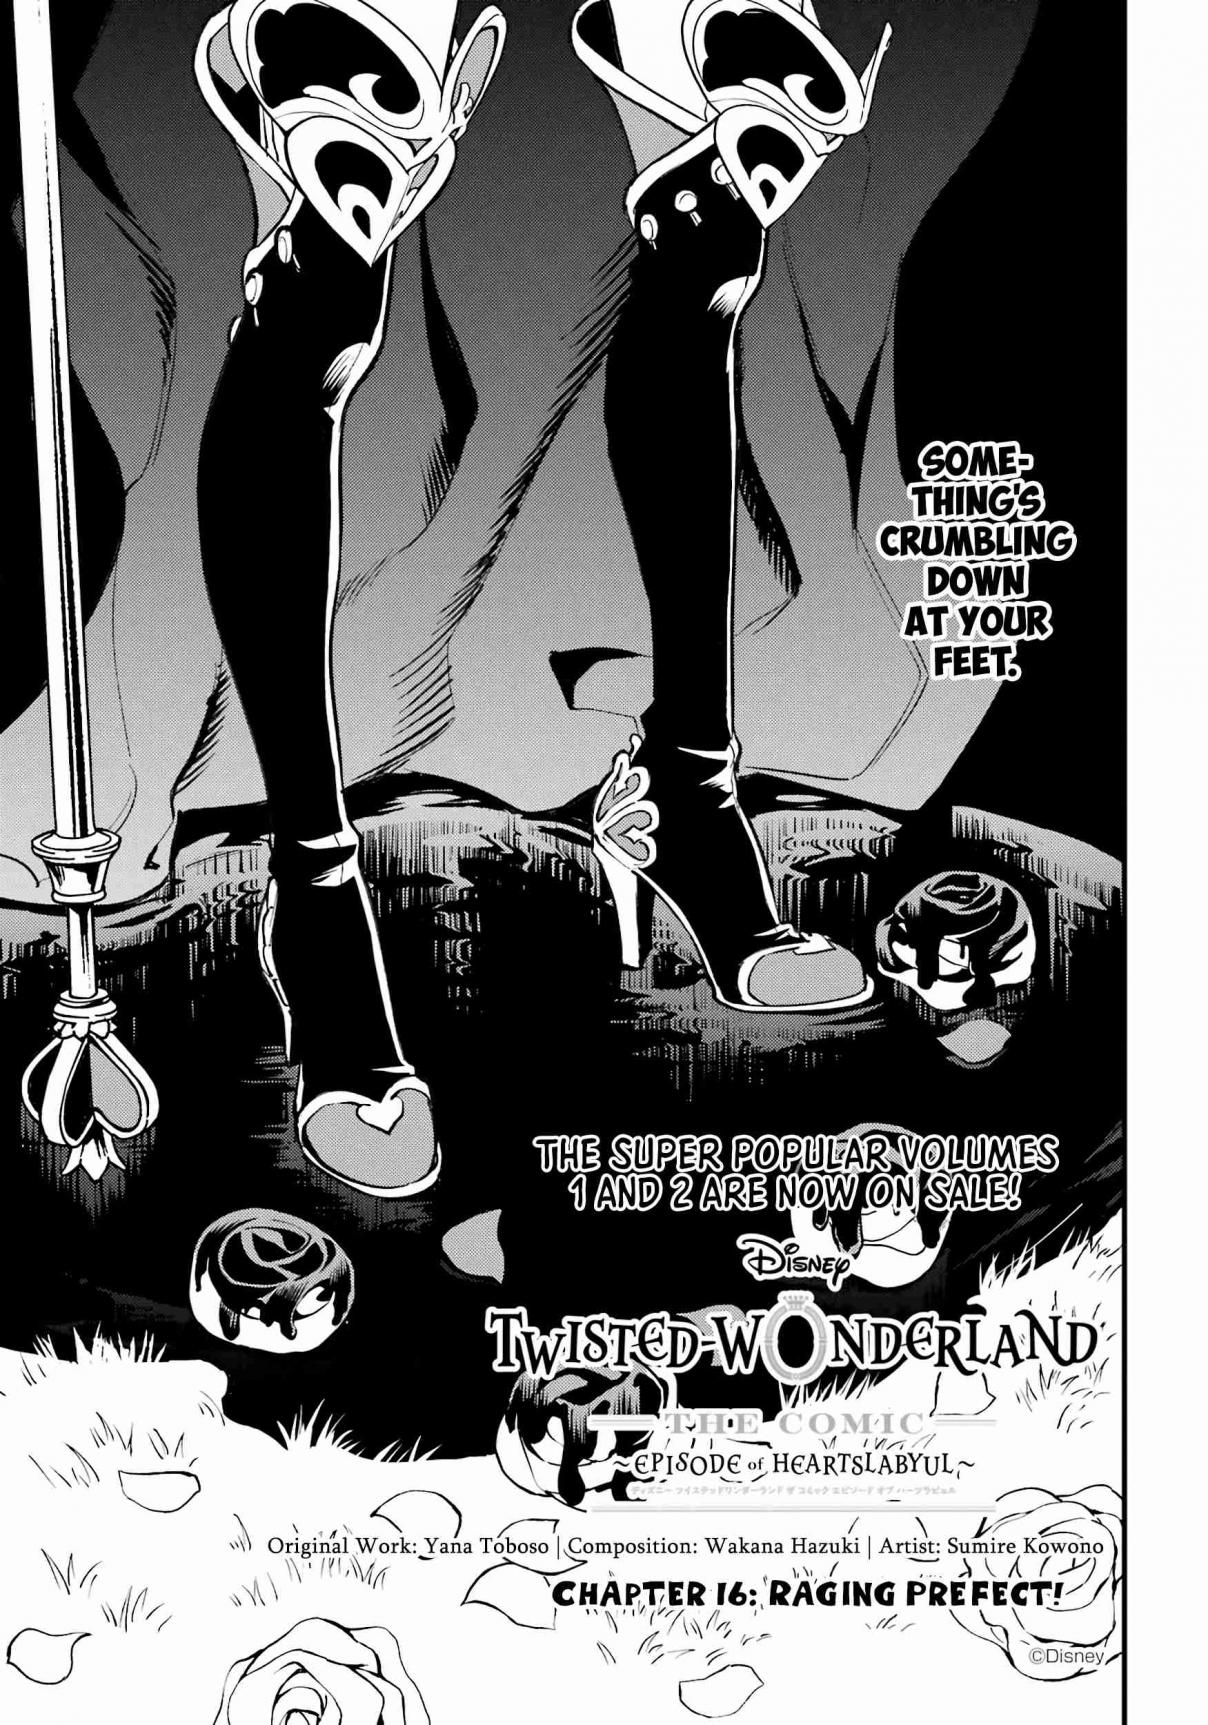 Disney Twisted Wonderland - The Comic - ~Episode of Heartslabyul~ 16